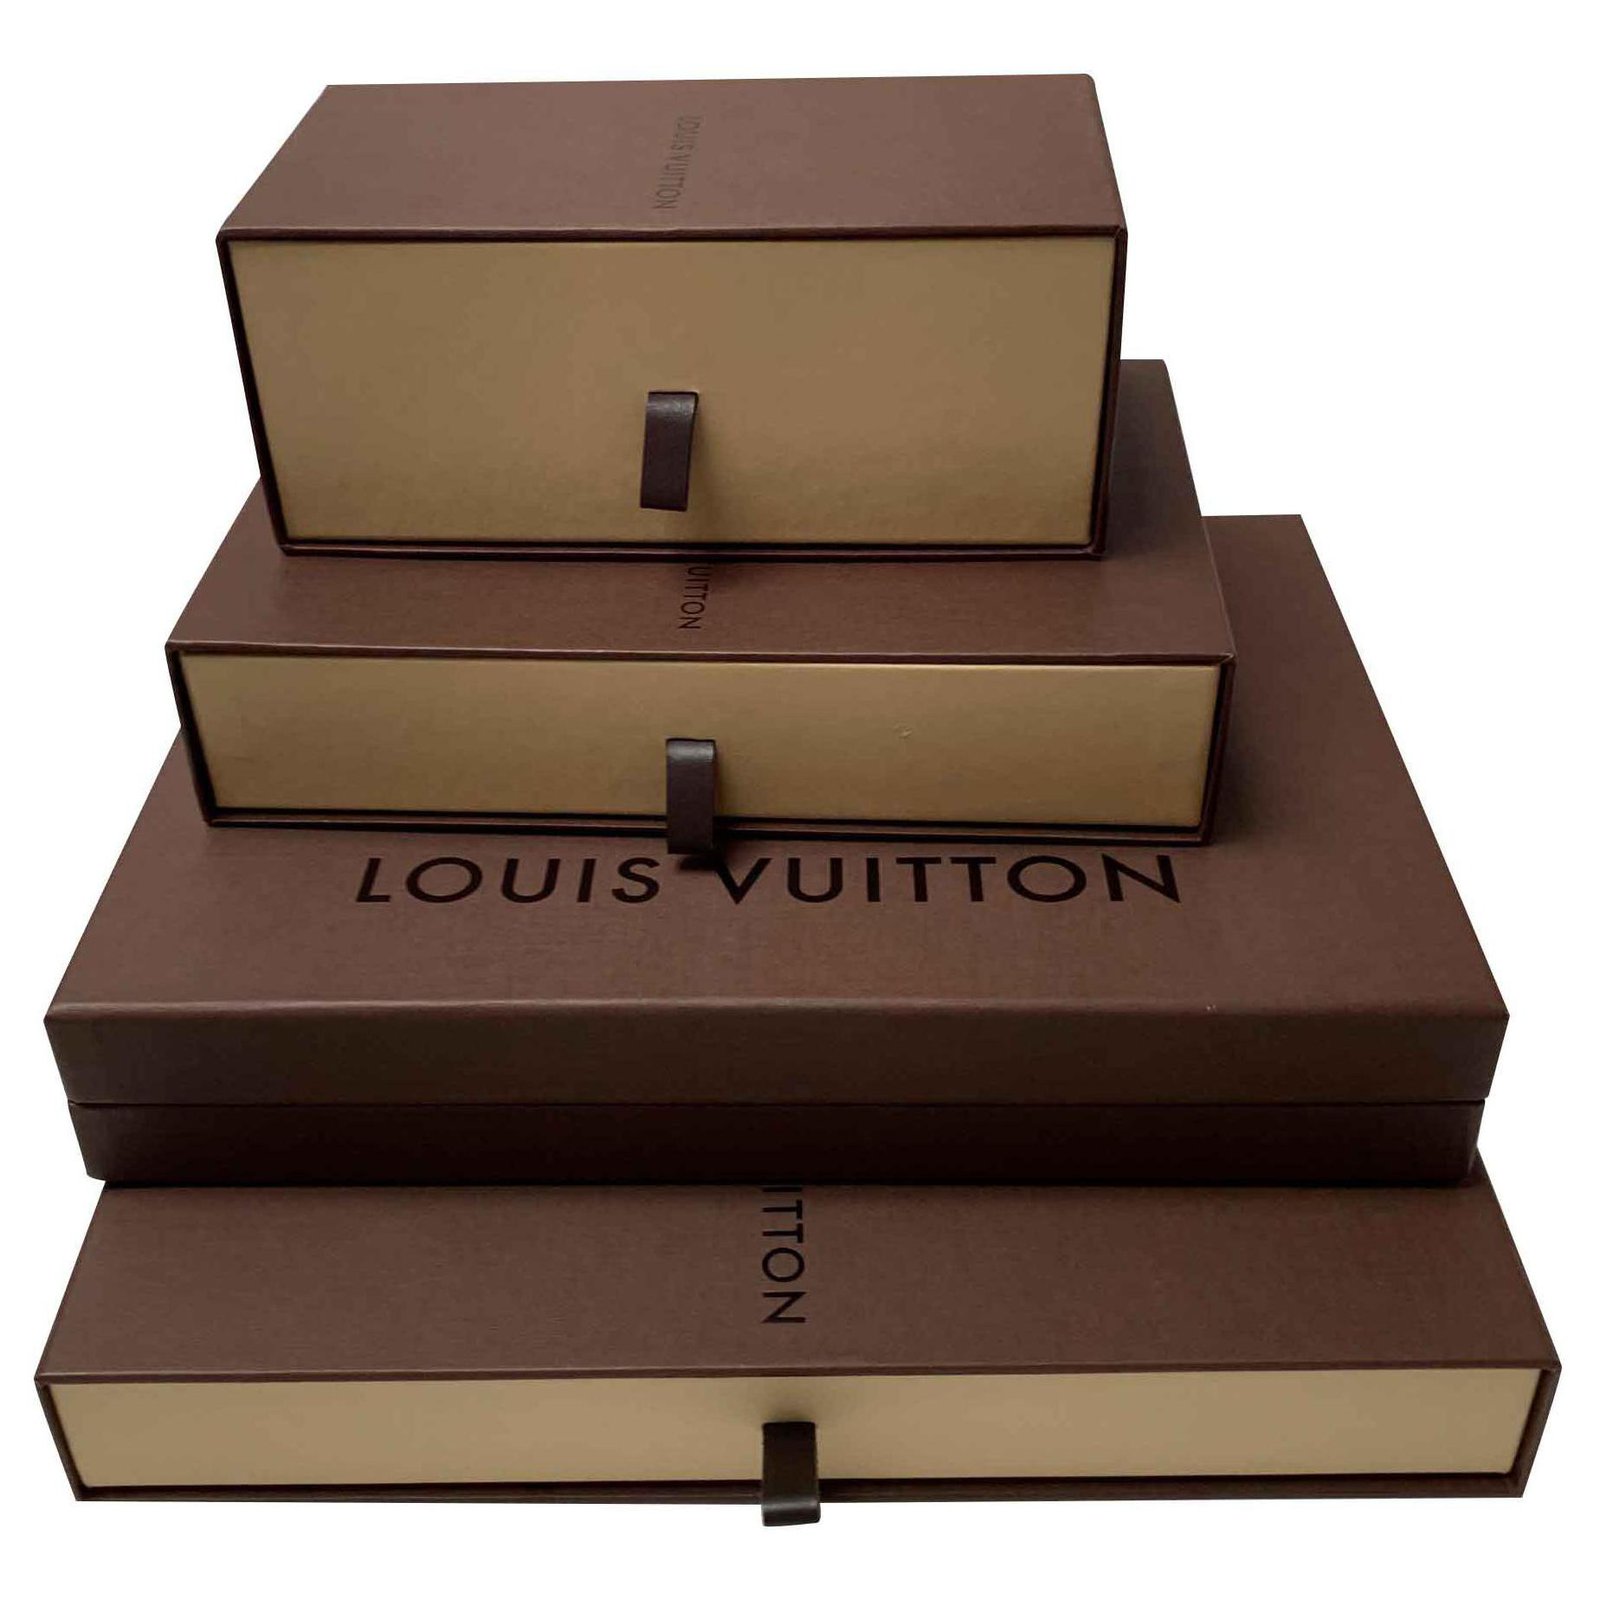 LOUIS VUITTON Caja de cartón. Longitud: 36 cm